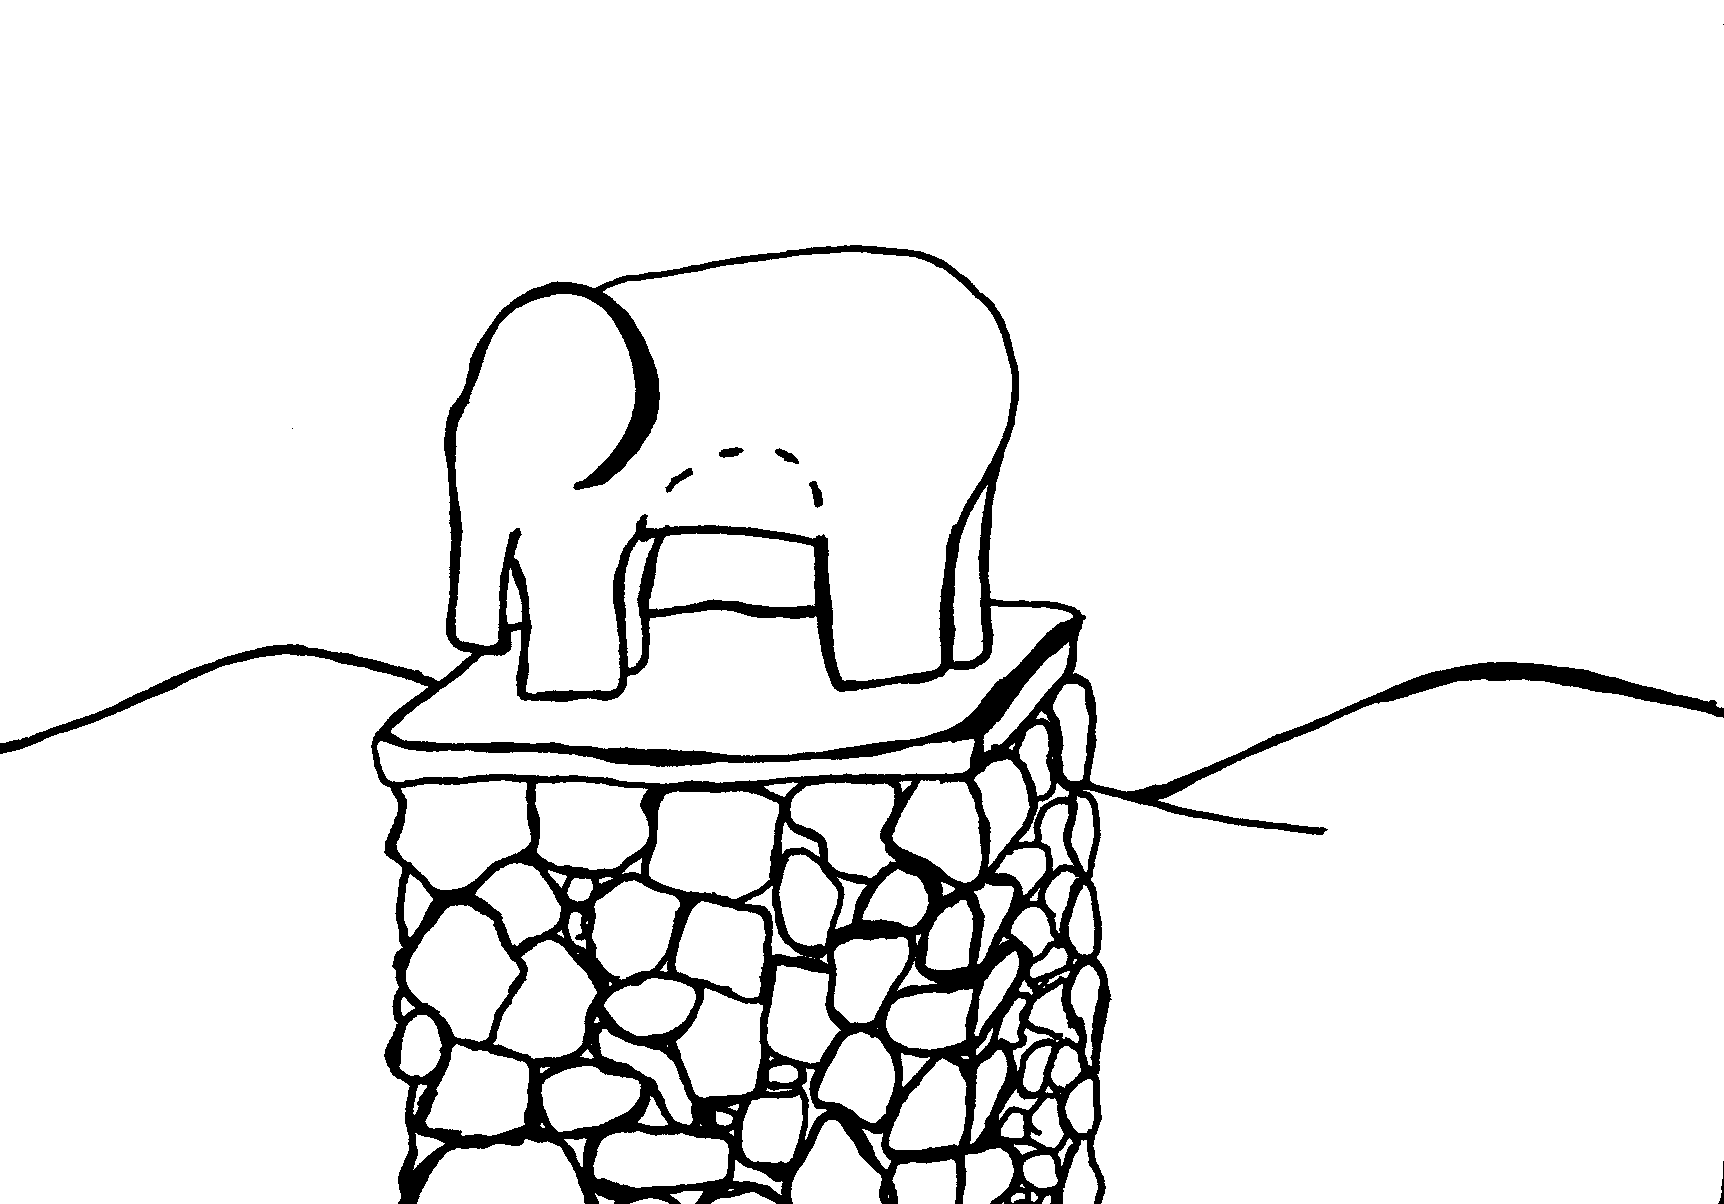 Slon kamenný